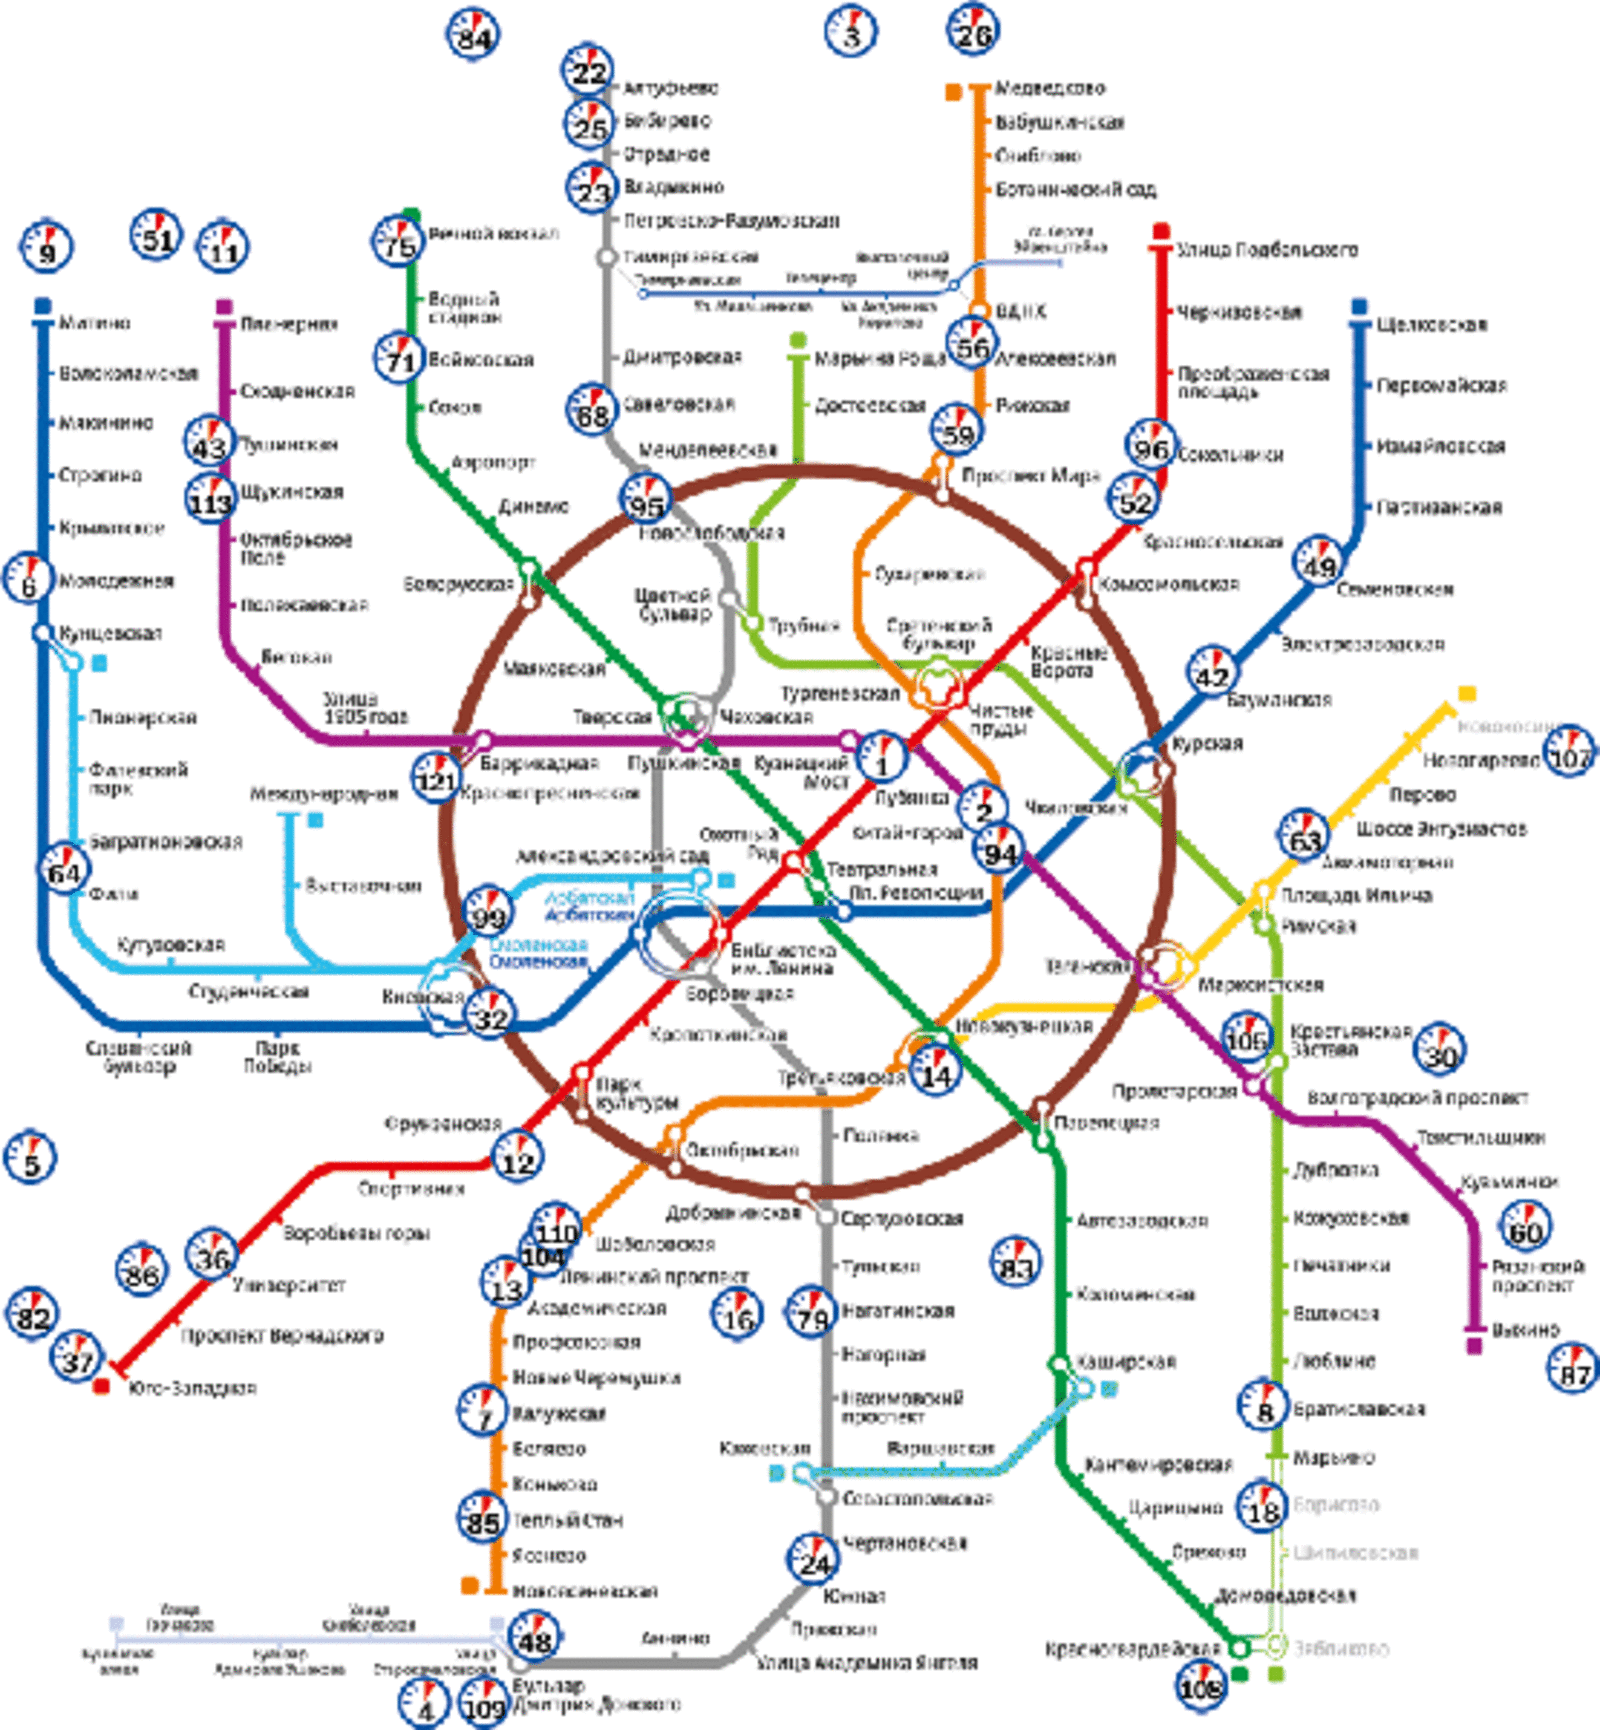 План метрополитена города москвы